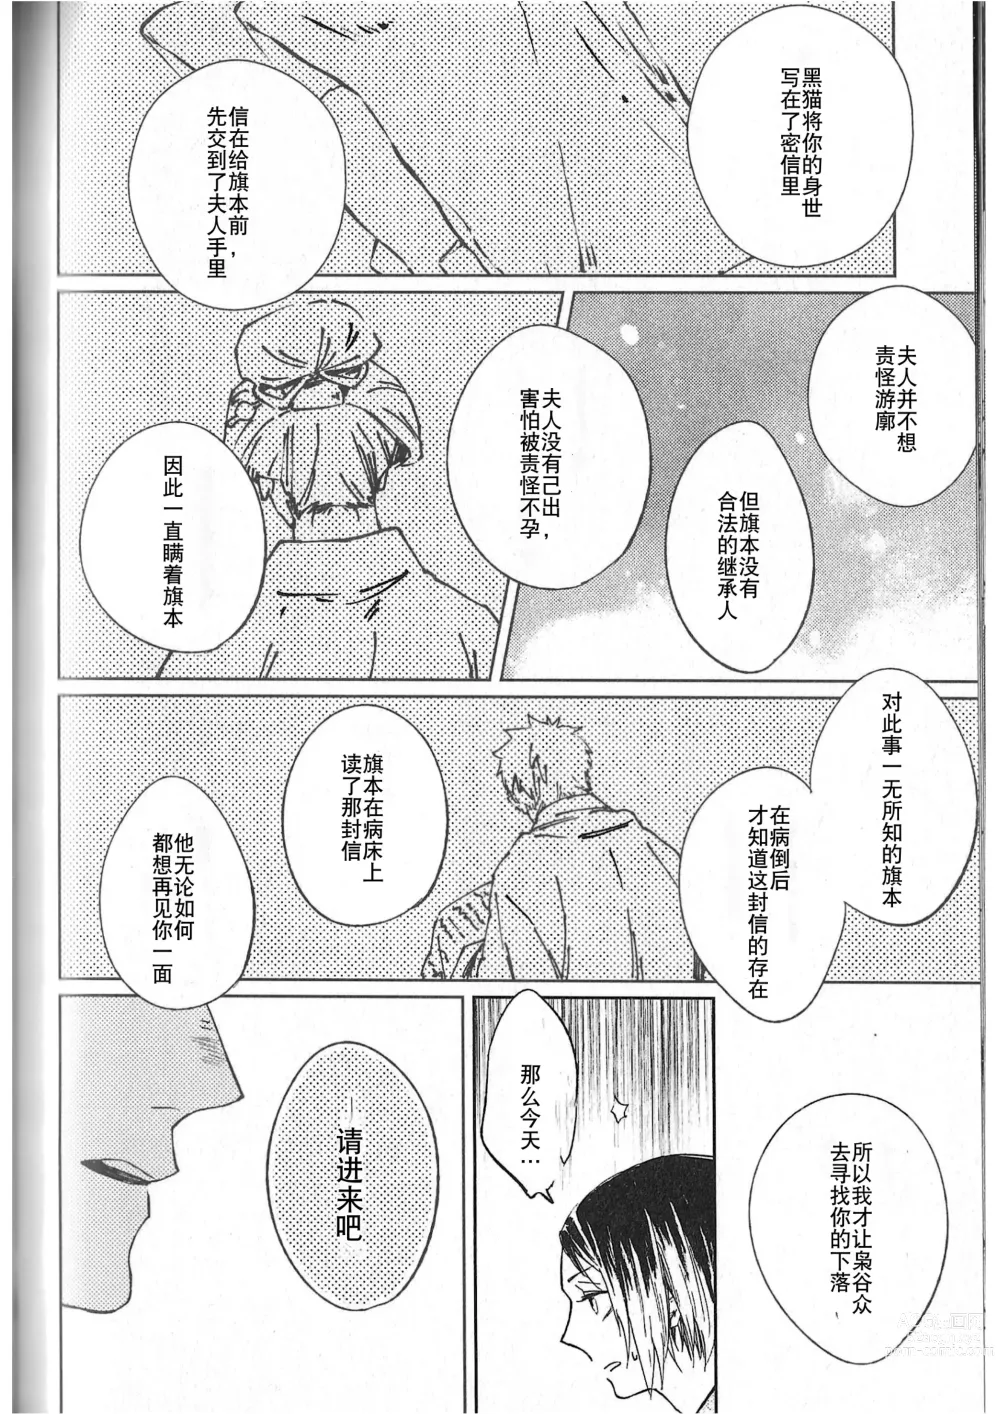 Page 27 of doujinshi 破晓之枭后篇